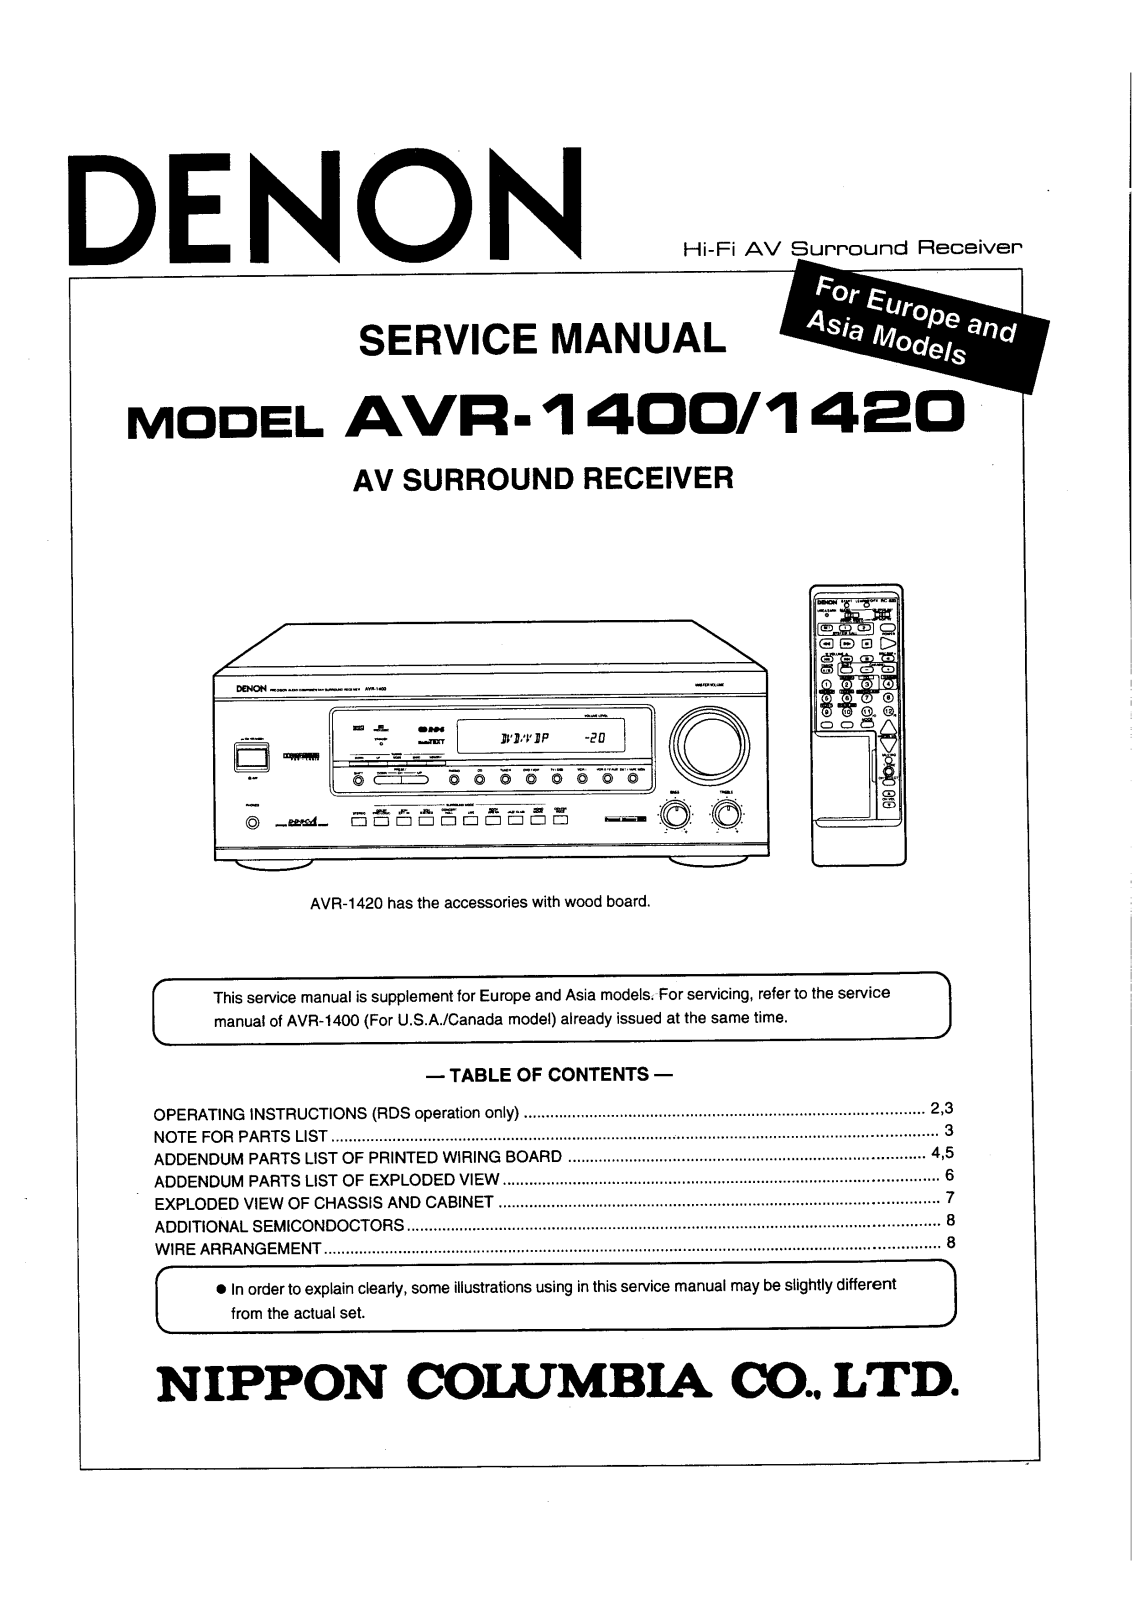 Denon AVR-1420 Schematic